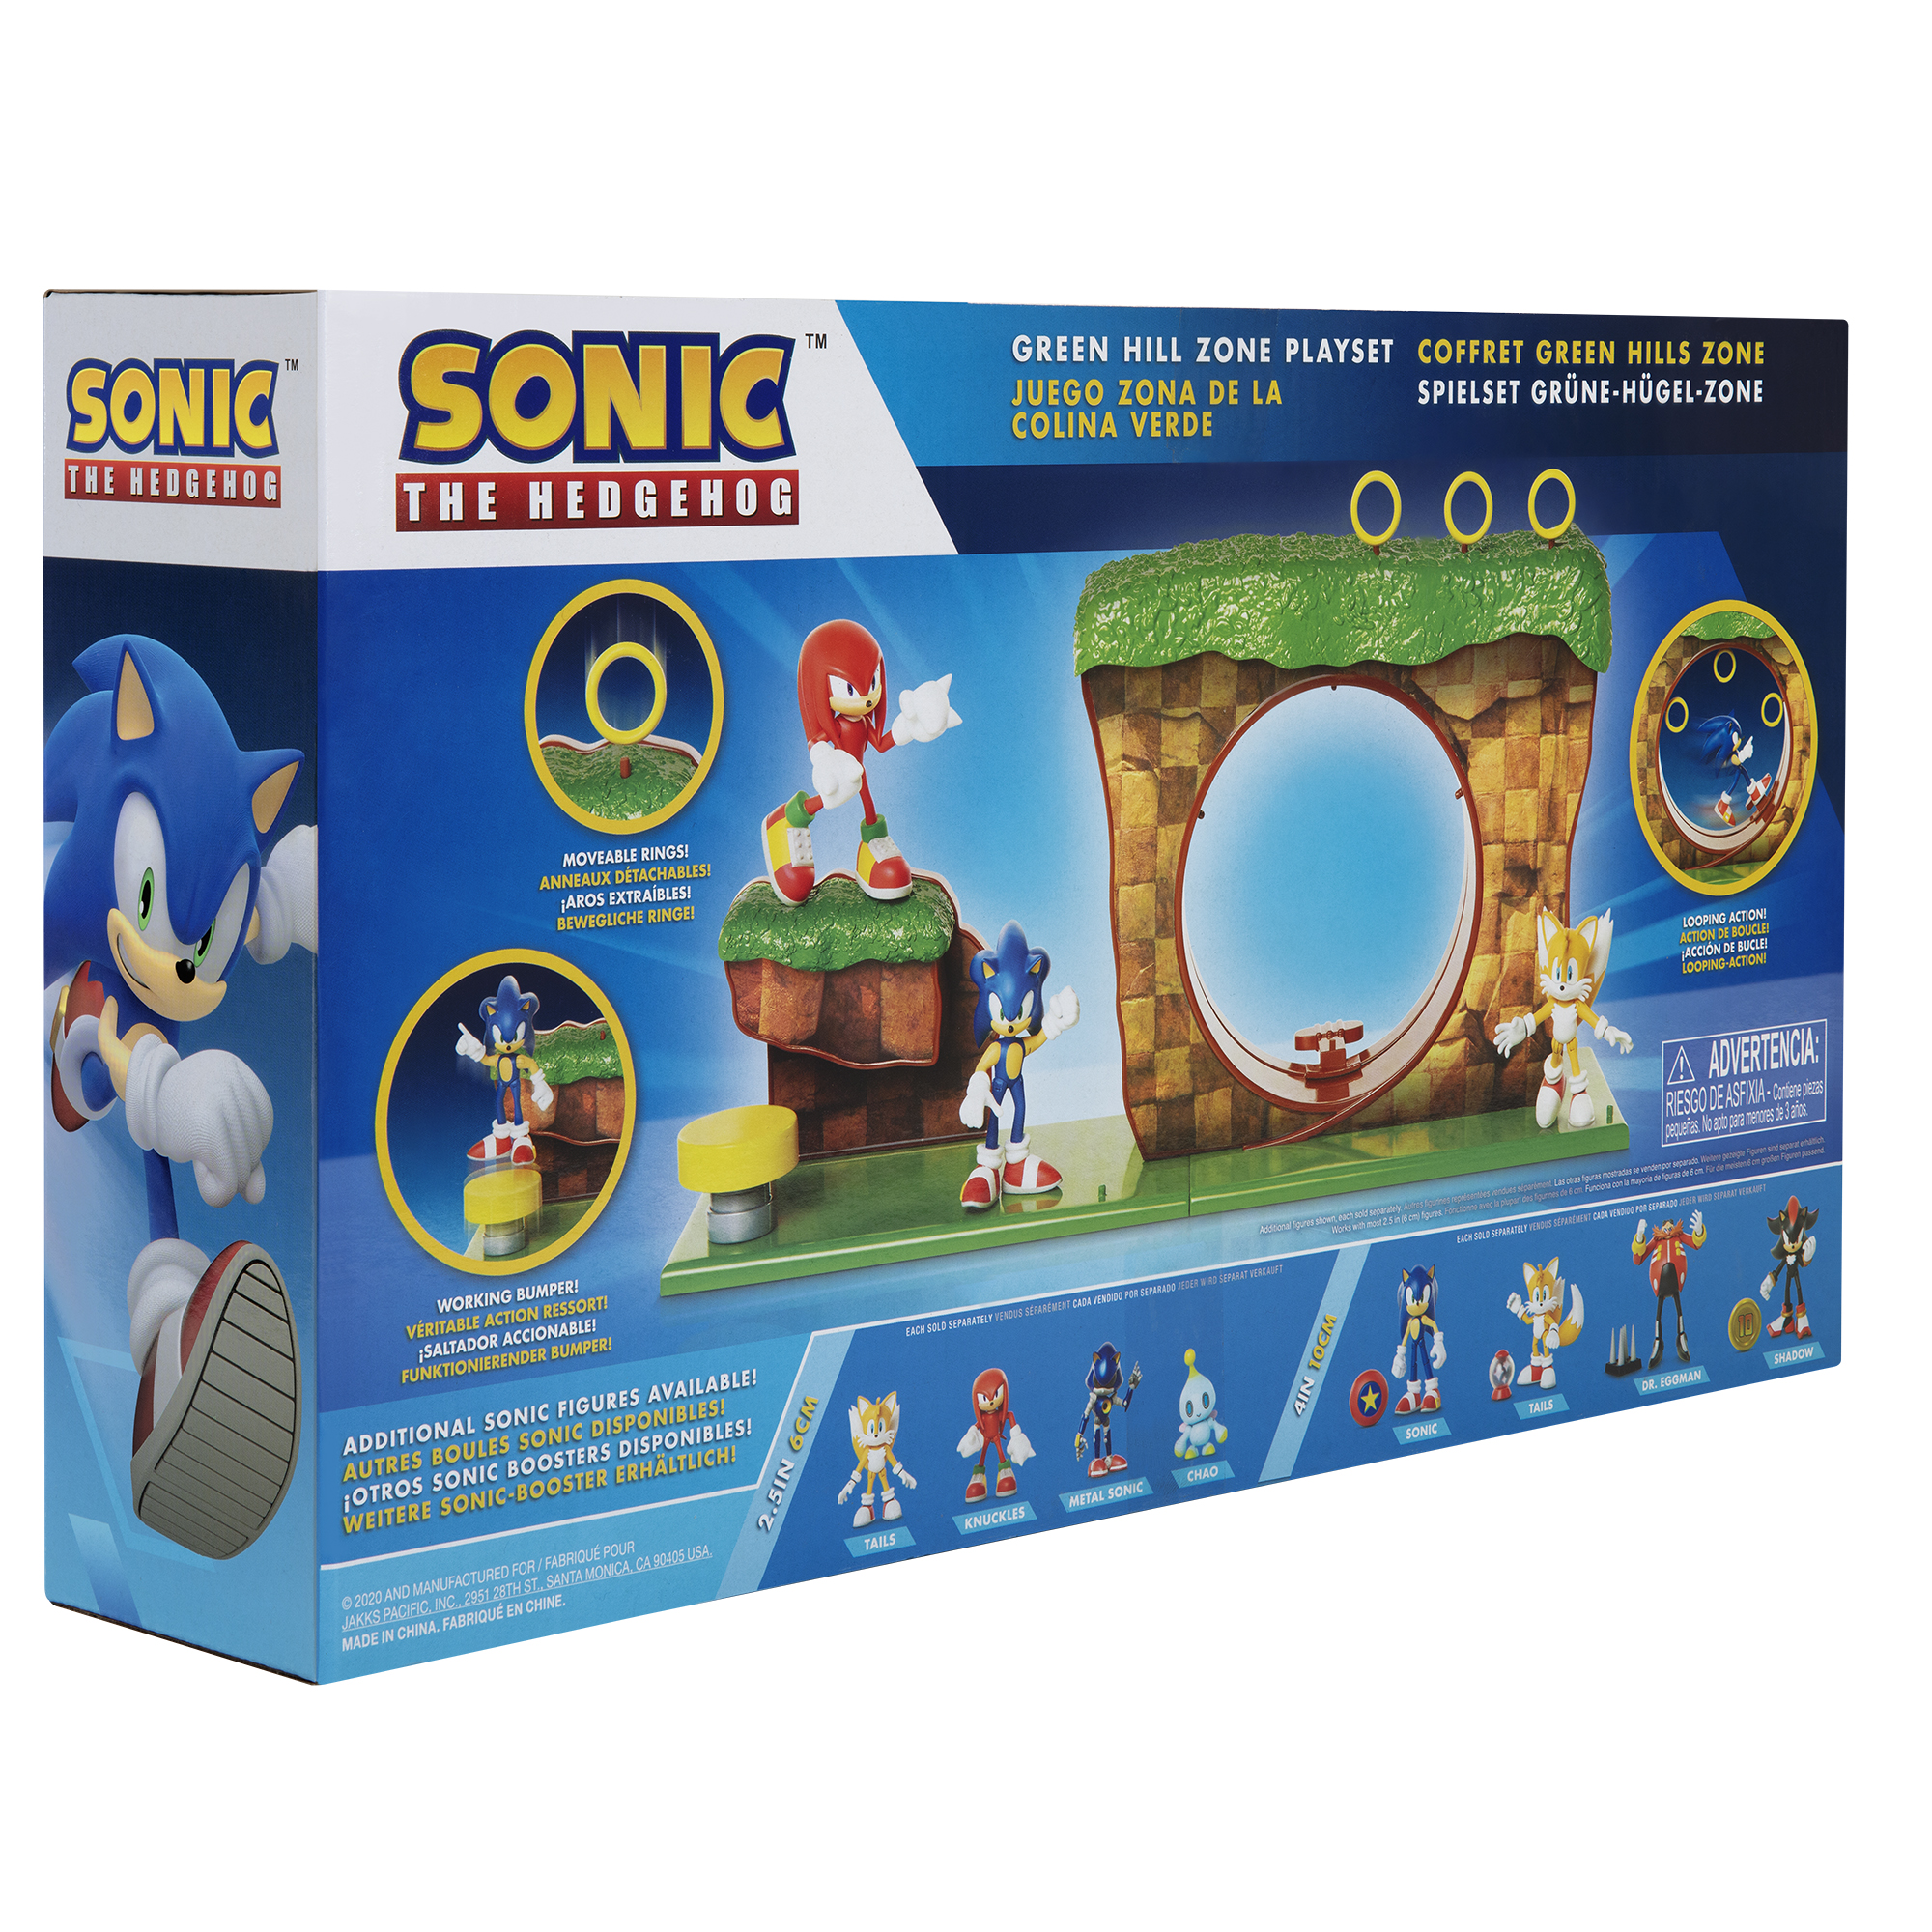 THE HEDGEHOG Sonic cm 6,5 Hill SONIC Spielfigur Spielset, Nintendo Green Zone